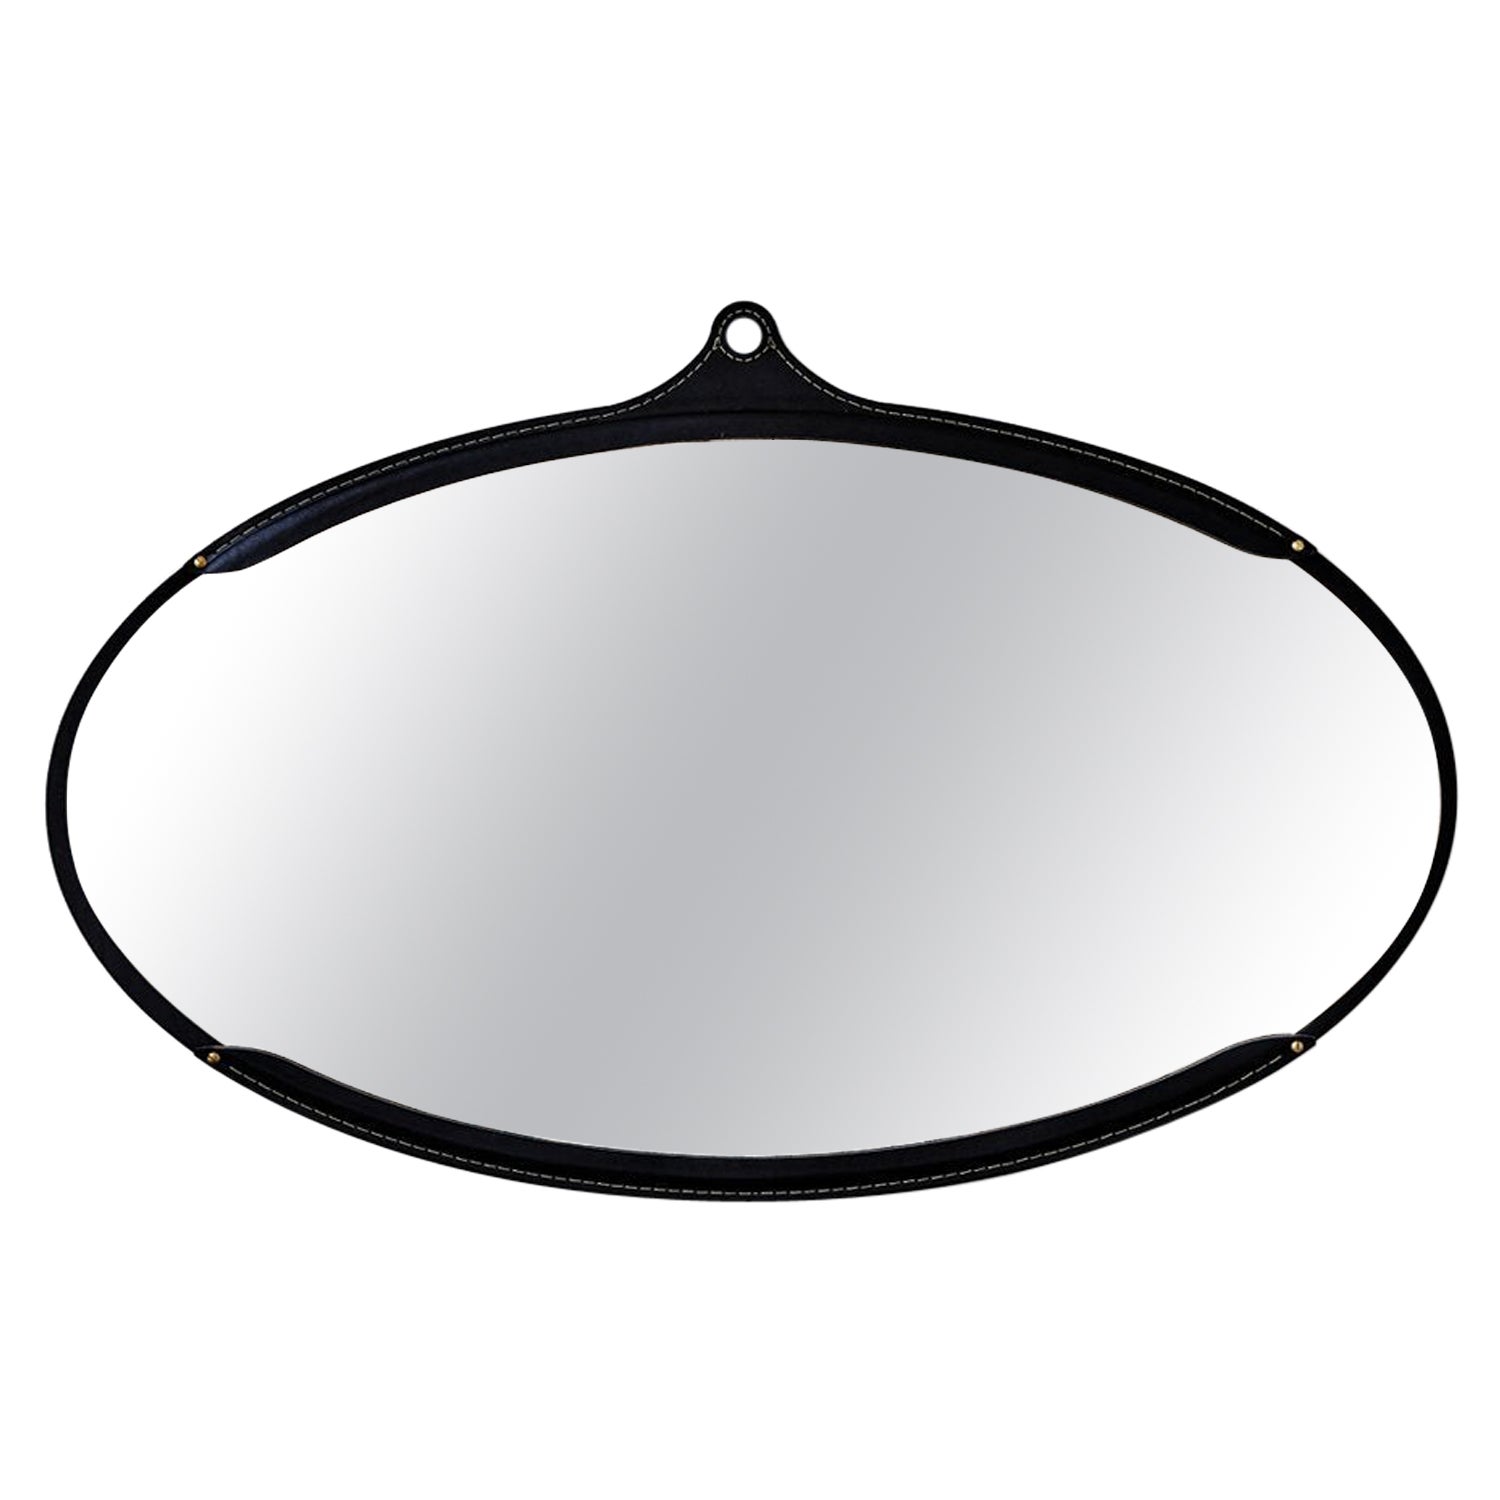 Moderner moderner breiter ovaler Fairmount-Spiegel aus schwarzem Leder